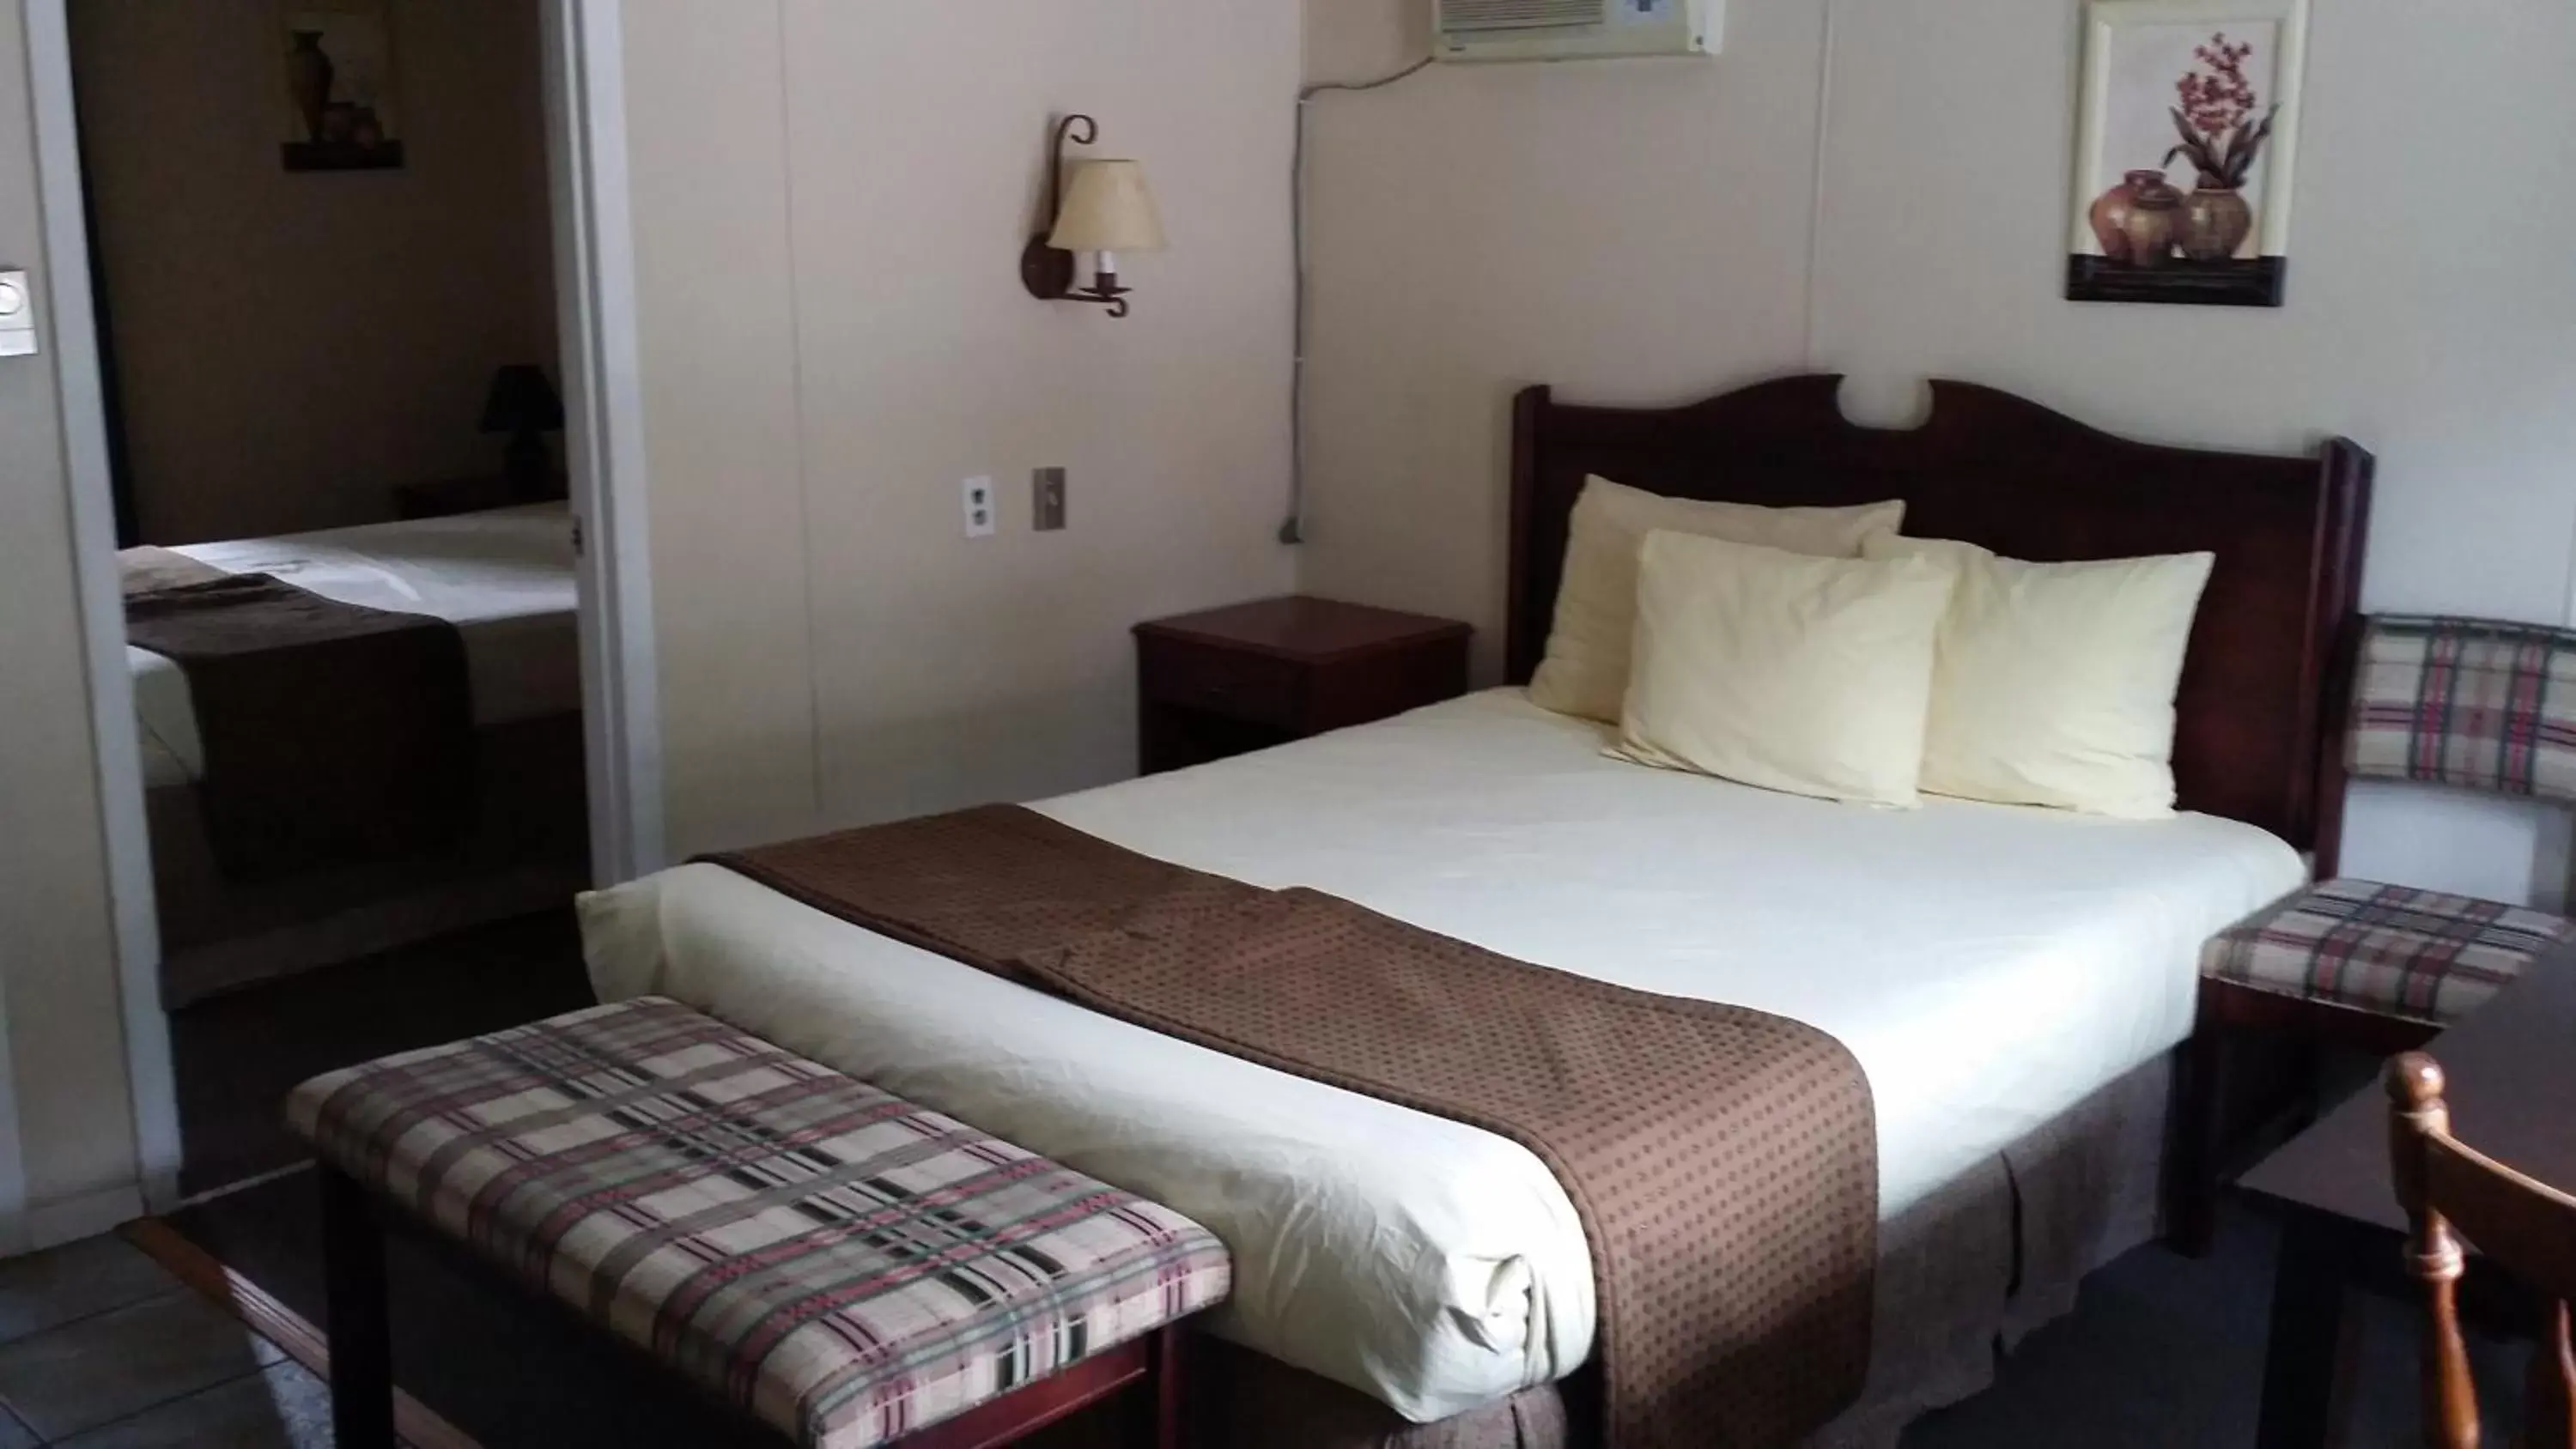 Bed, Room Photo in AppleTree Inn